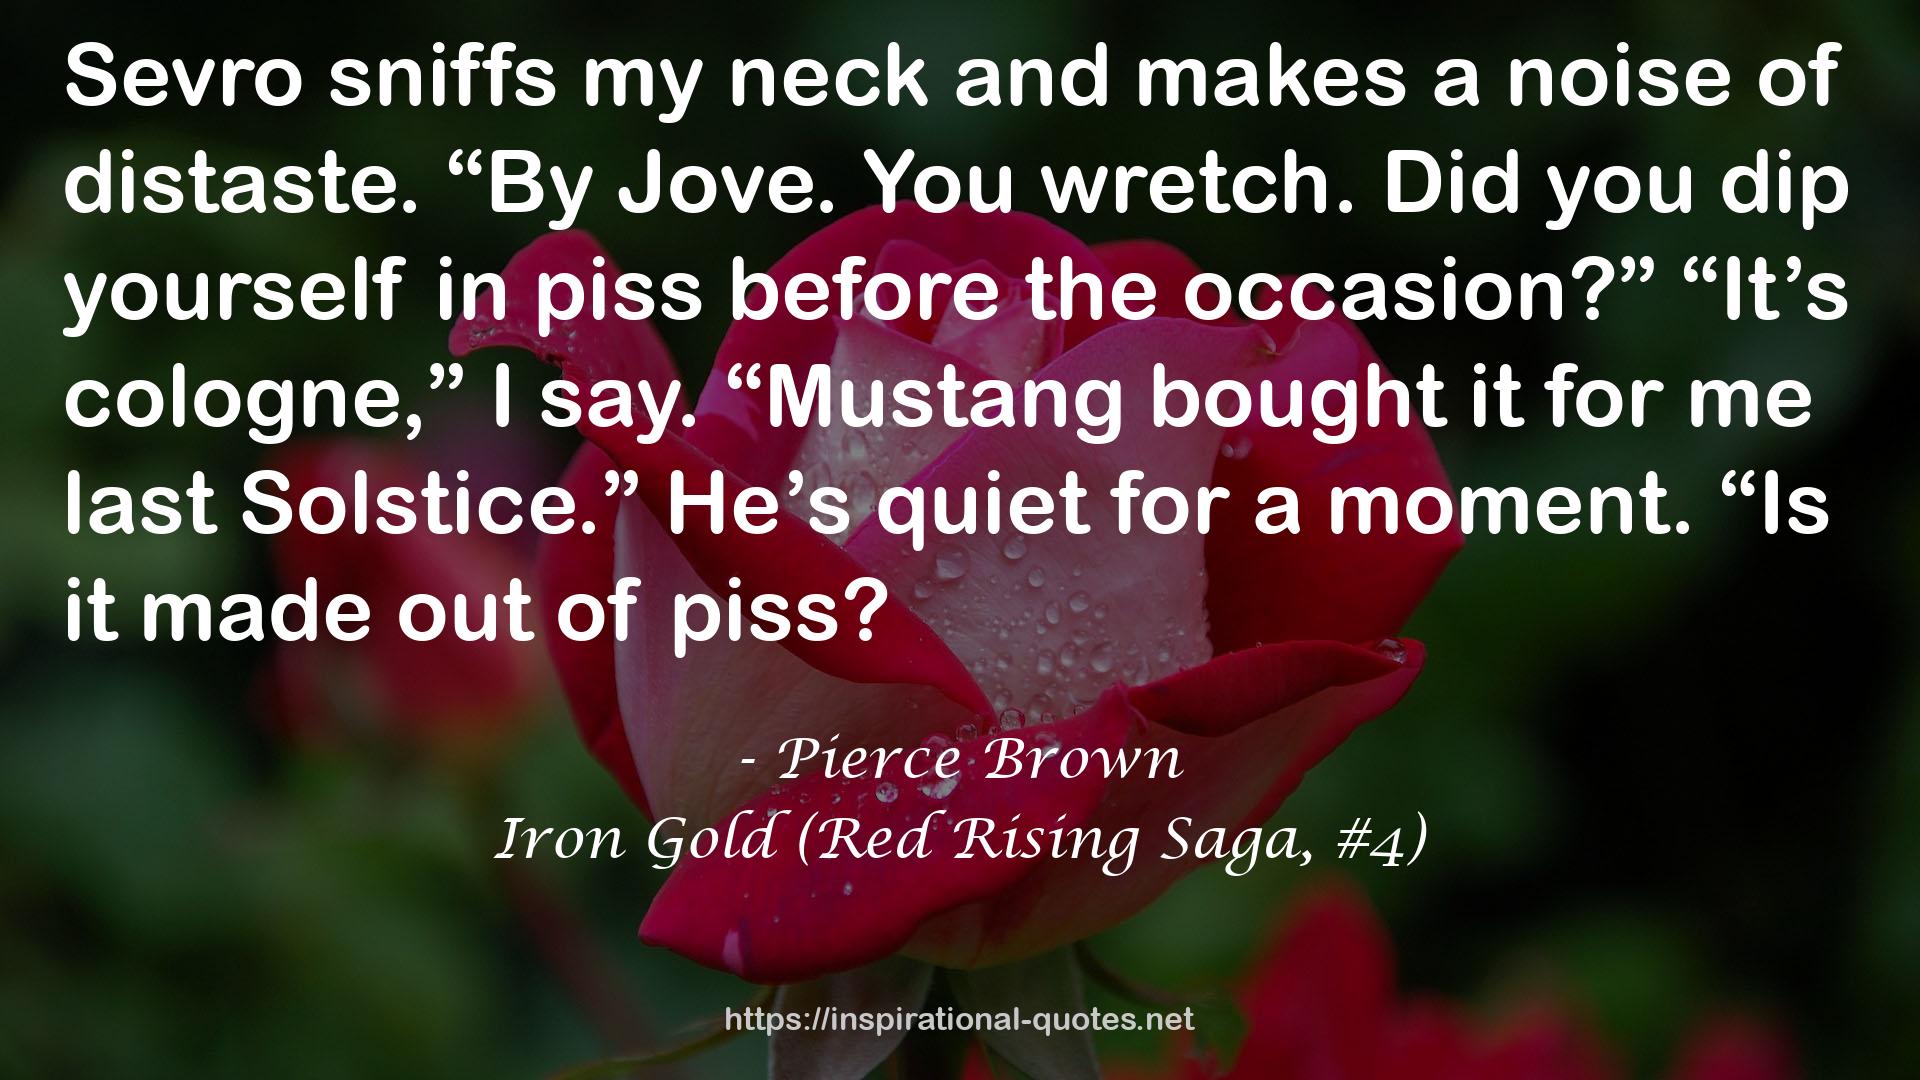 Iron Gold (Red Rising Saga, #4) QUOTES